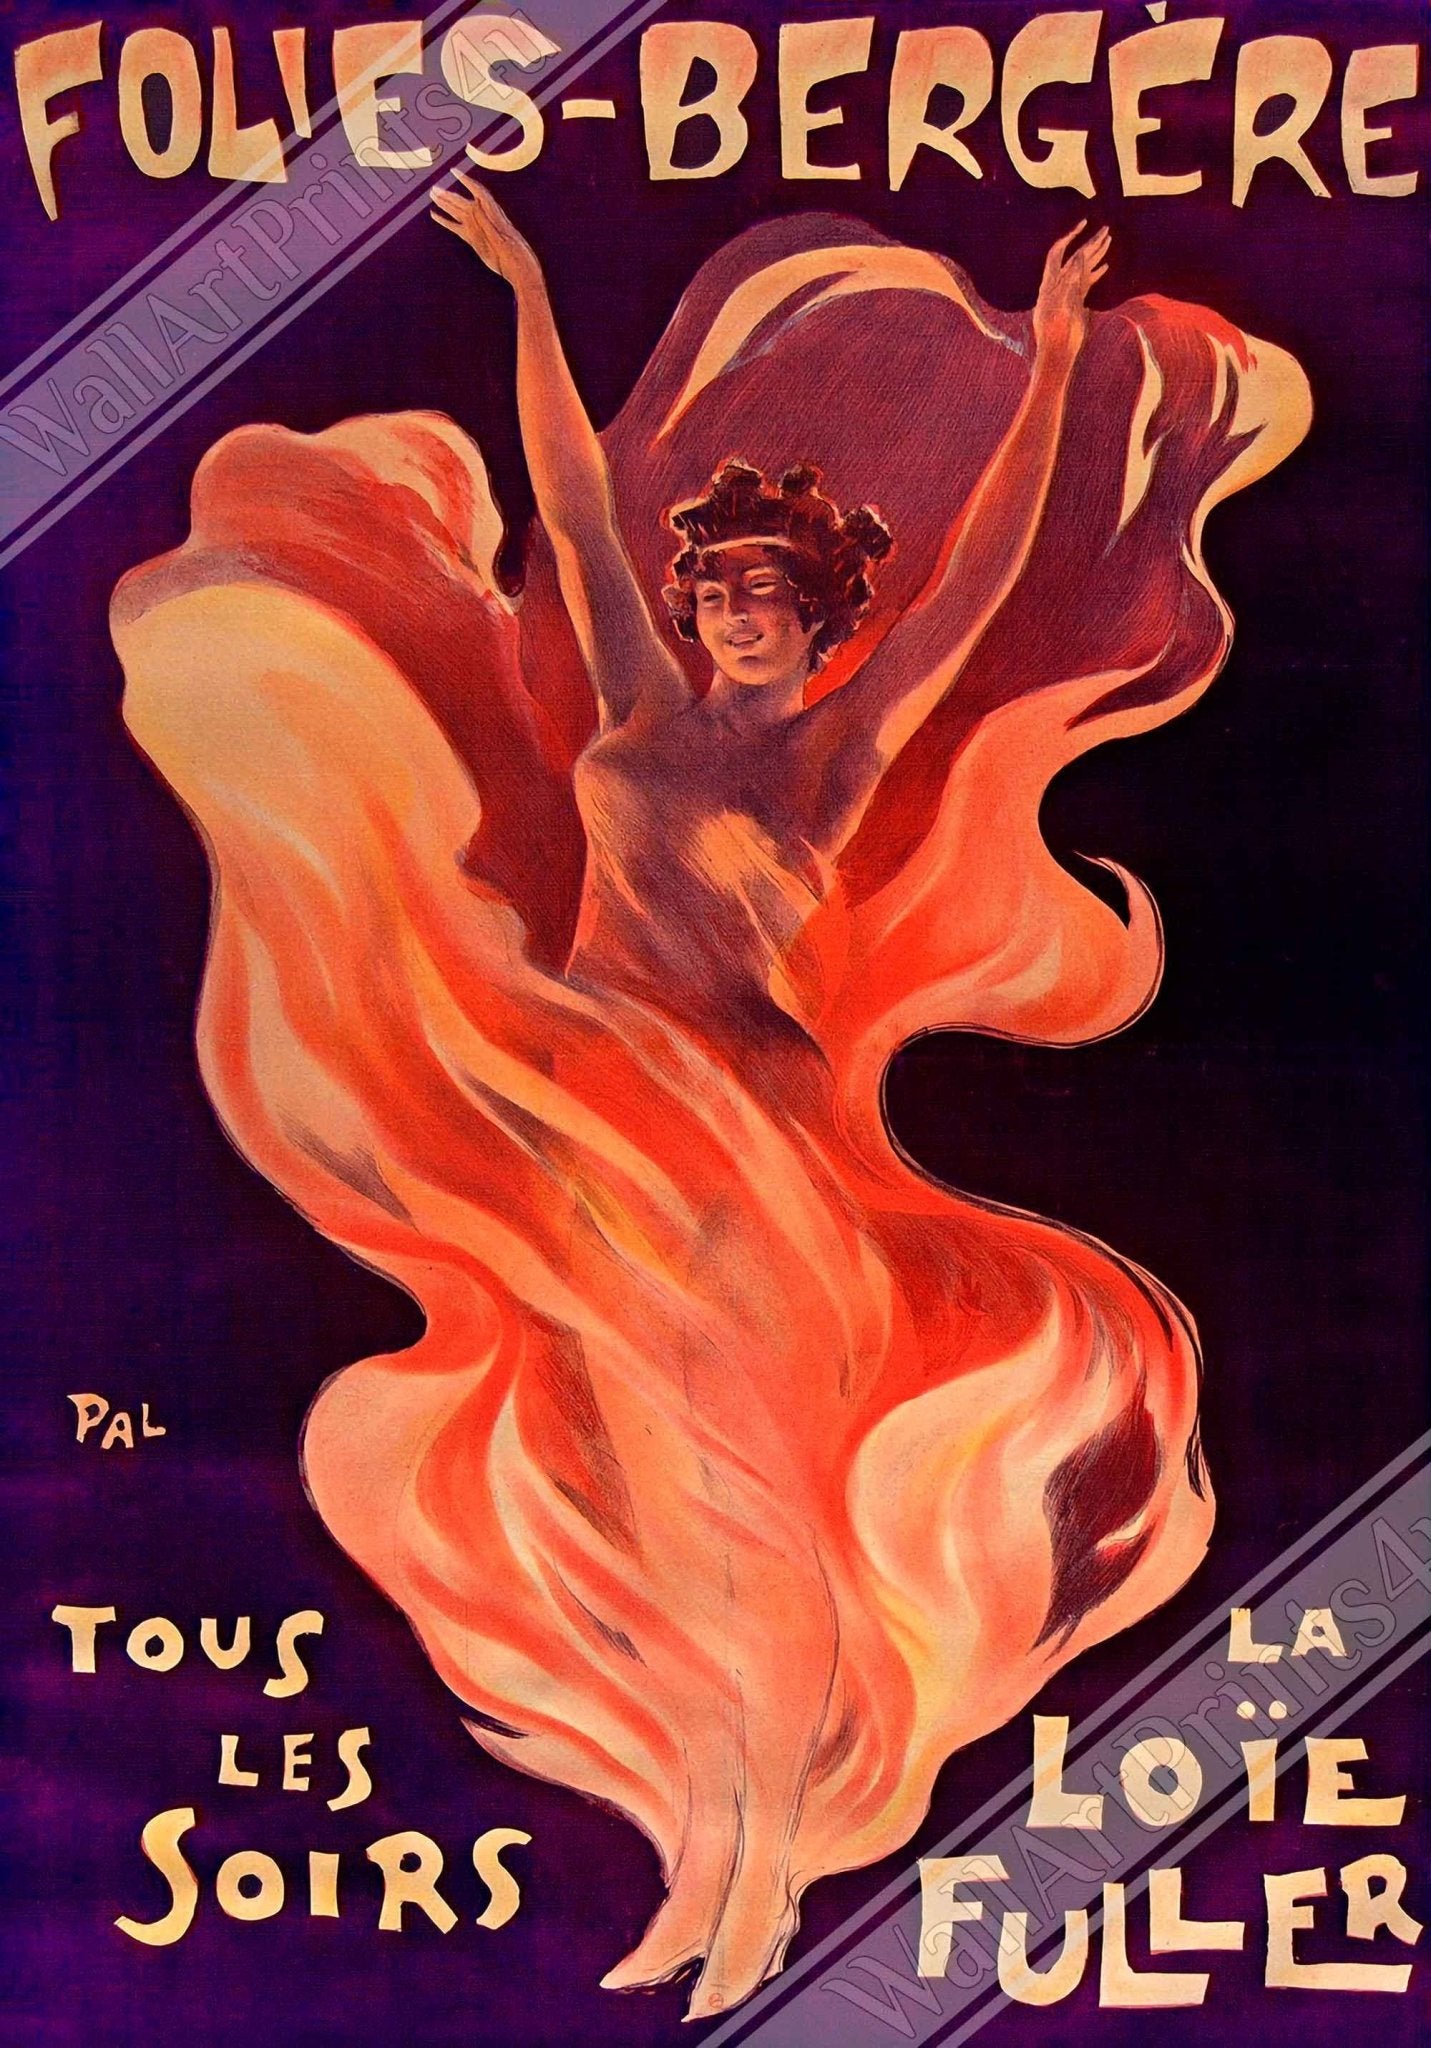 Folie Bergere Poster - La Loie Fuller 1900s - French Poster Folie Bergere Print American Dancer Loie Fuller - WallArtPrints4U